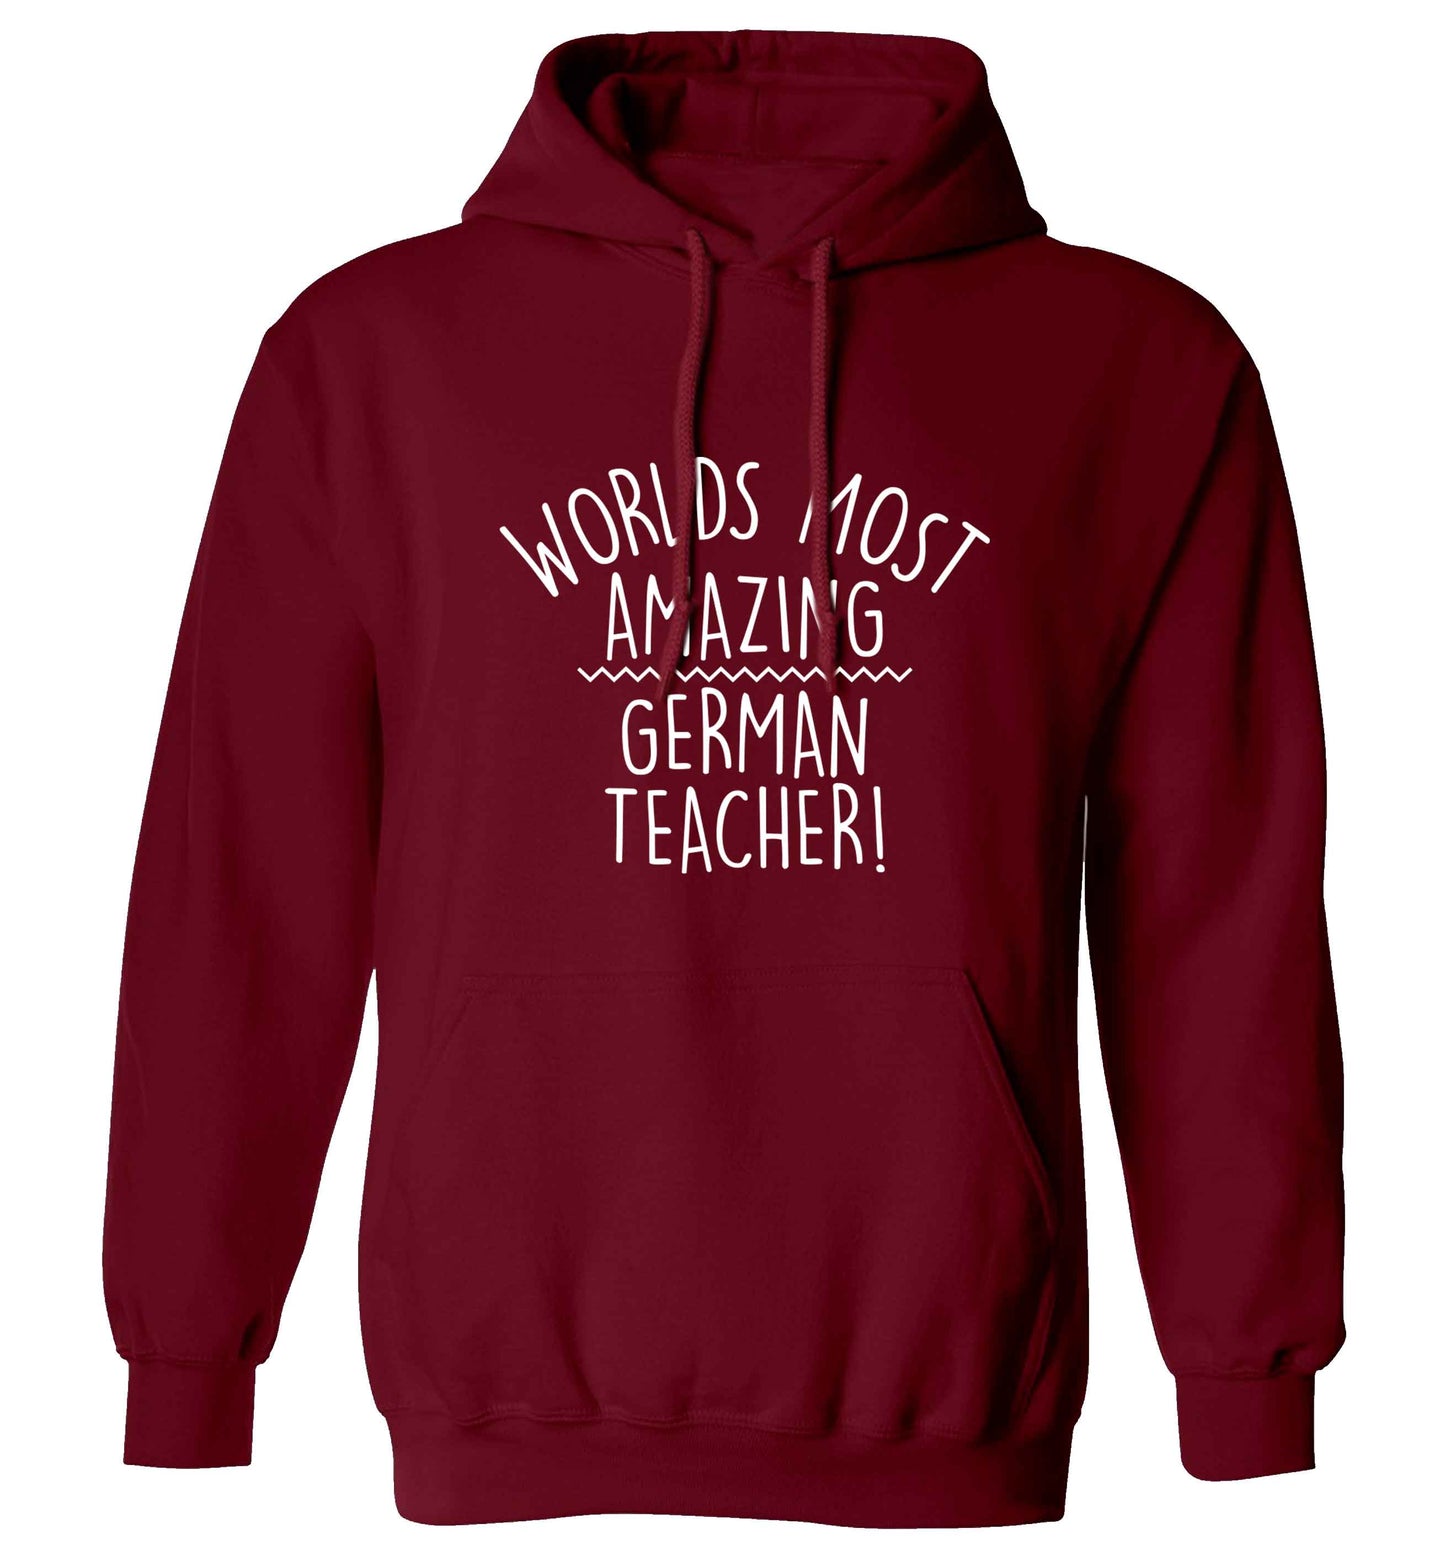 Worlds most amazing German teacher adults unisex maroon hoodie 2XL